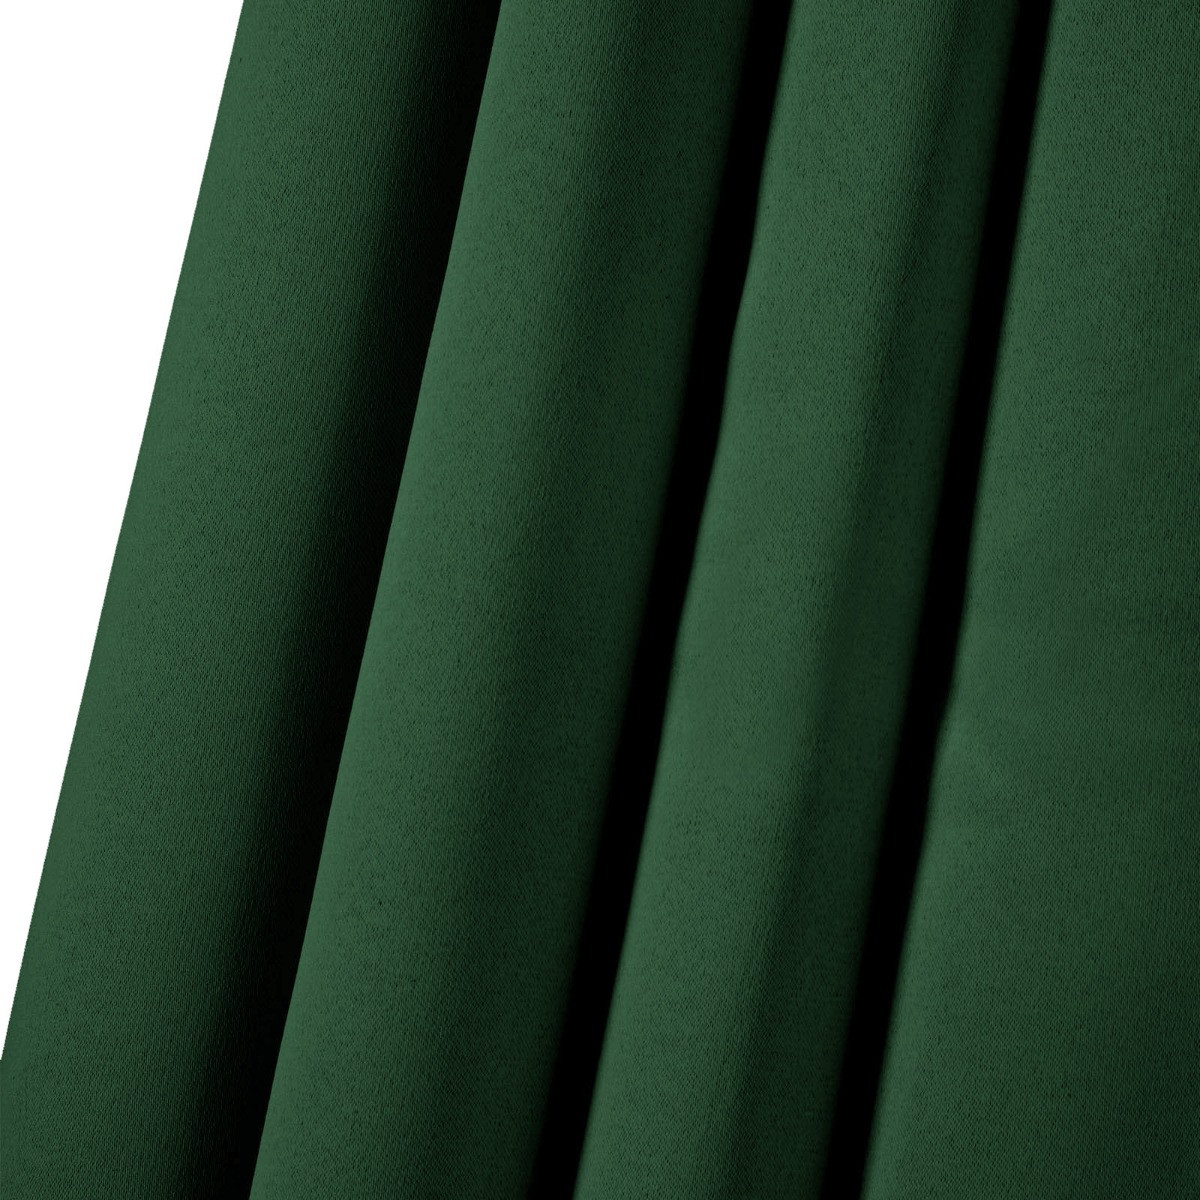 Dreamscene Eyelet Blackout Curtains, Forest Green - 168 x 182cm (66" x 72")>